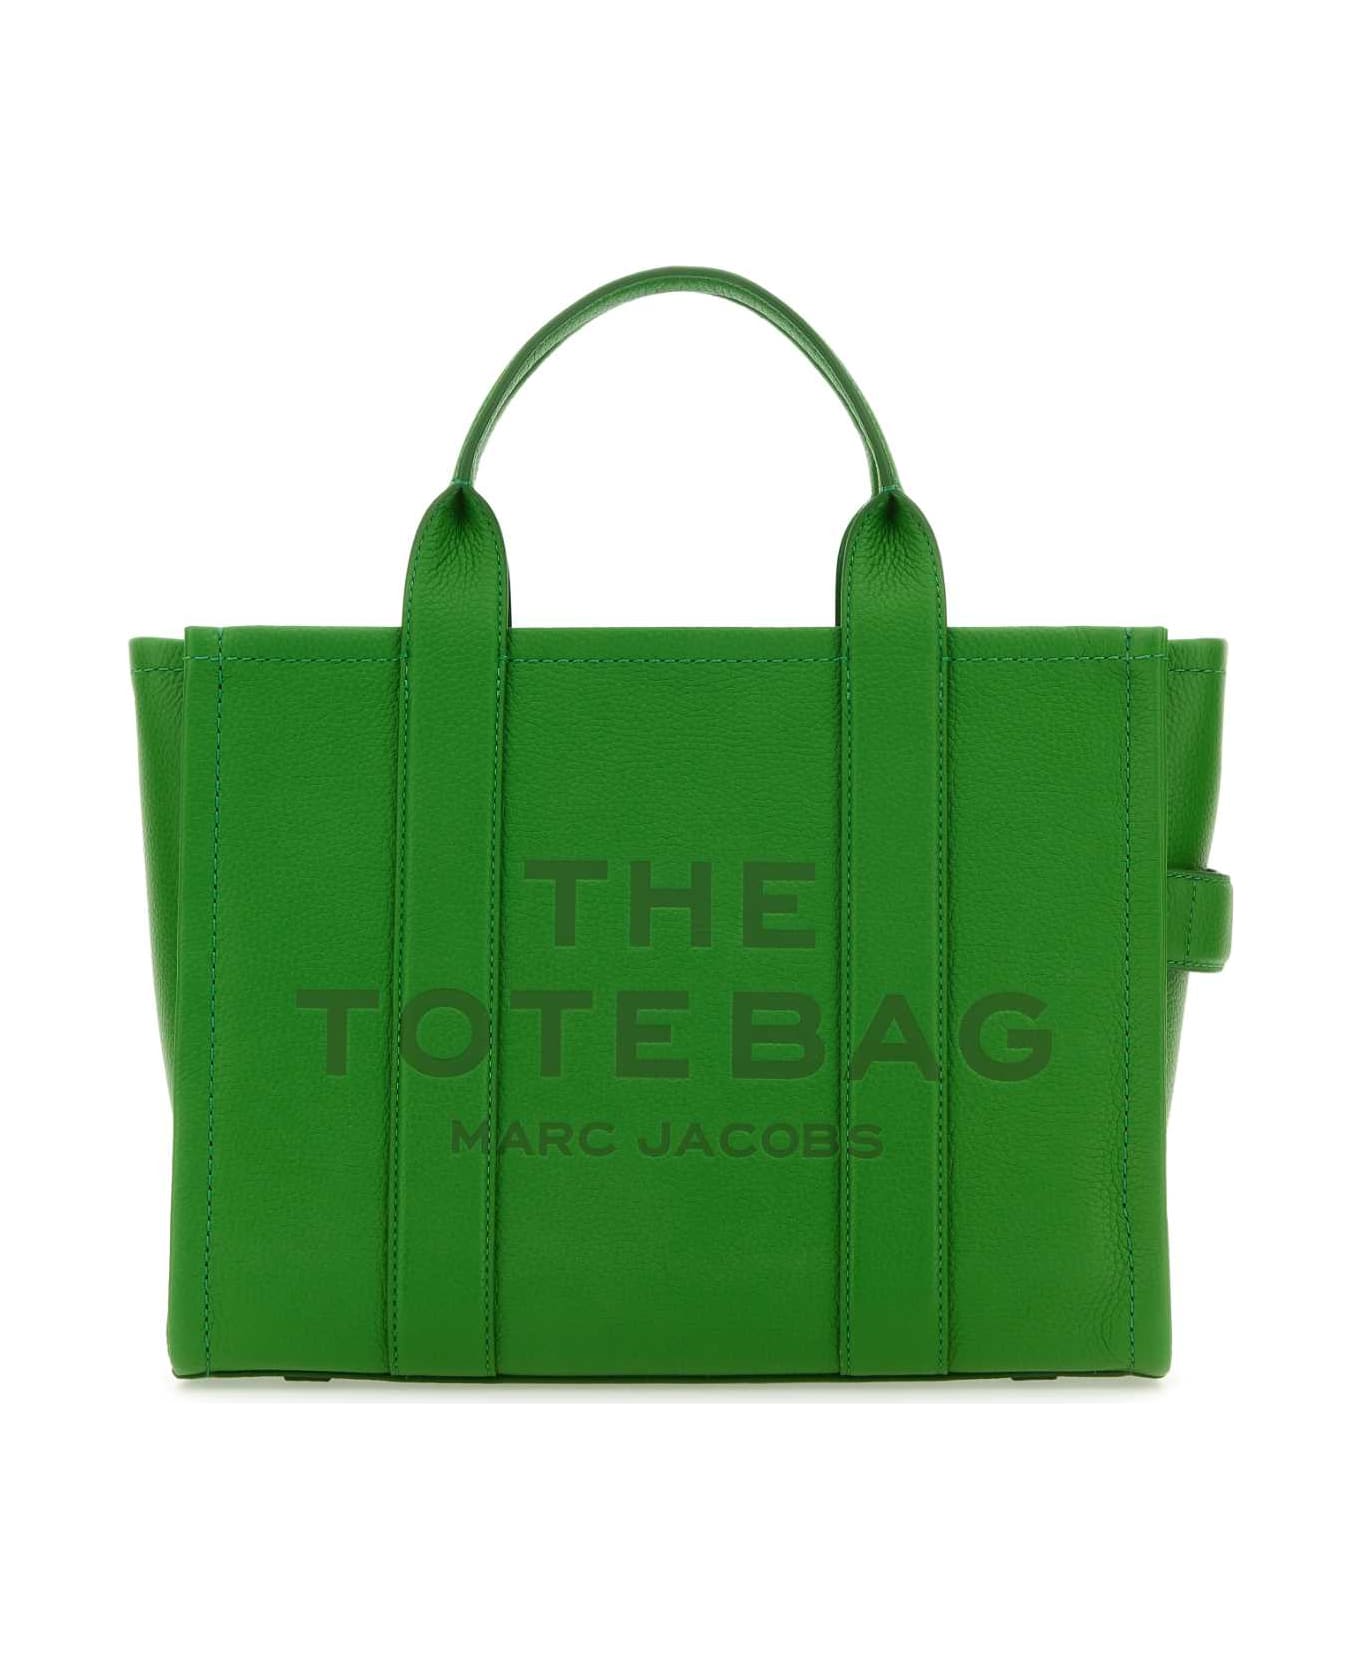 Marc Jacobs Green Leather Medium The Tote Bag Handbag - KIWI